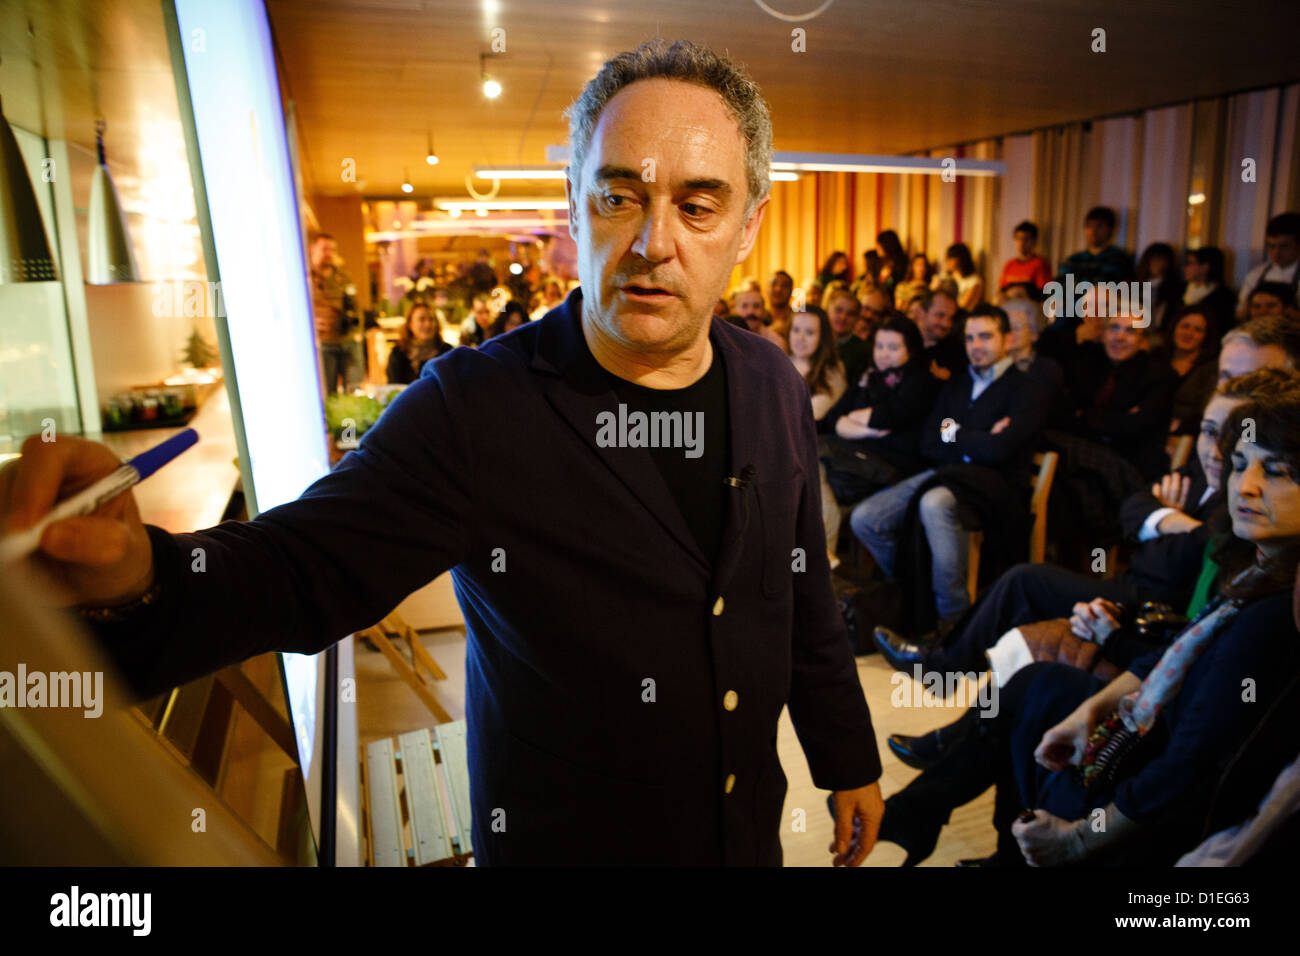 14/12/12 Chef Ferran Adria gives speech at Tondeluna restaurant, Logroño, La Rioja, Spain. Stock Photo